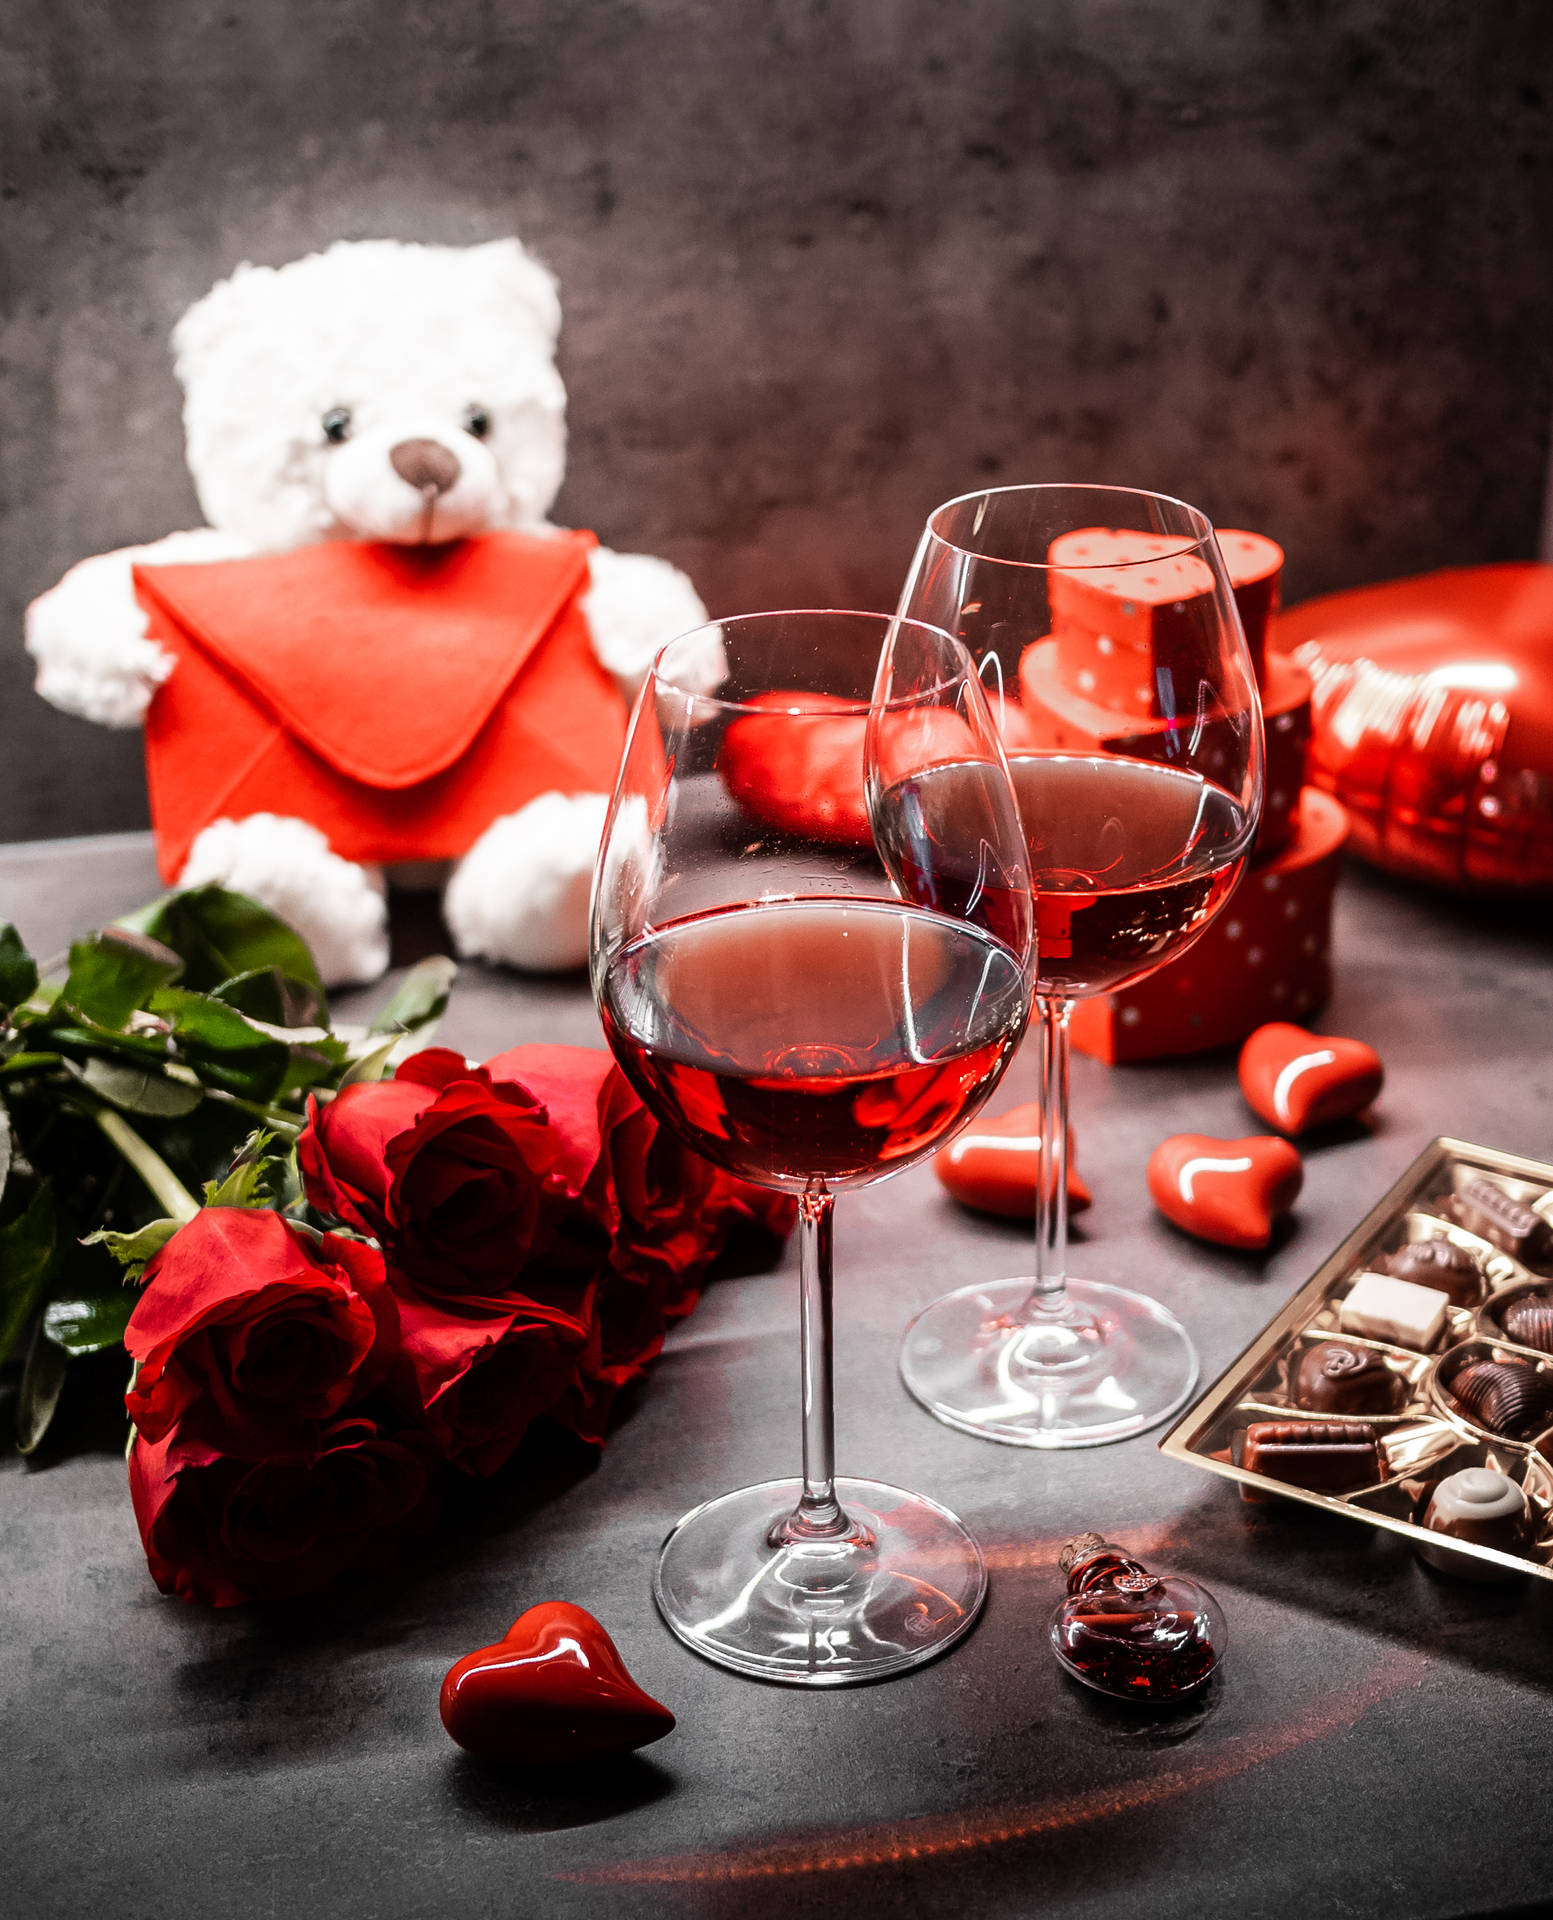 Romantic Roses For Date Night Wallpaper